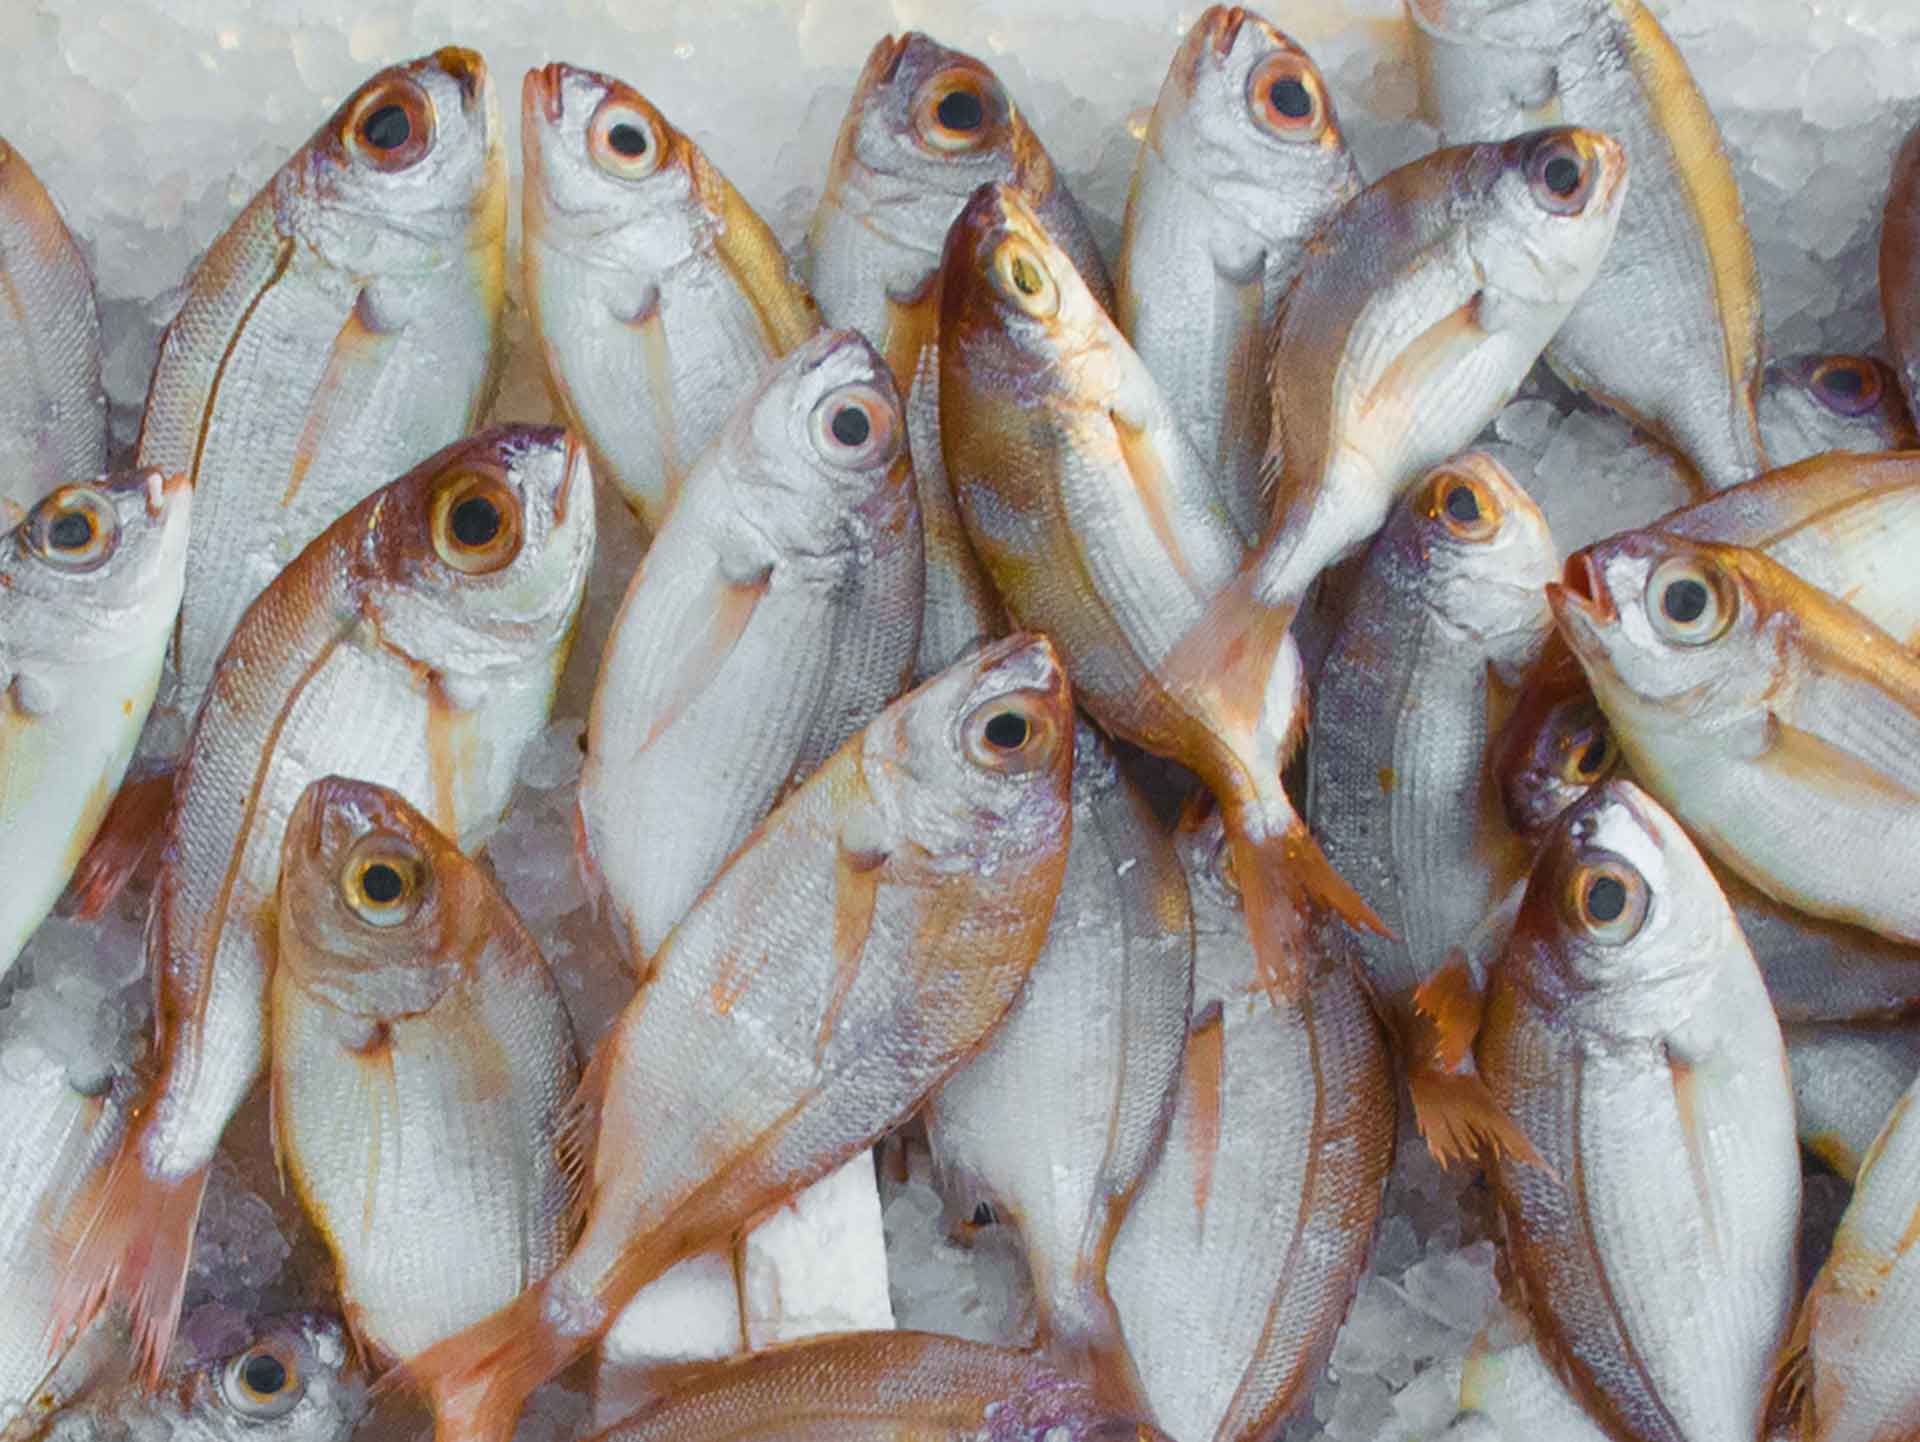 https://catsportfishing.com/wp-content/uploads/2022/05/How-to-Make-Fish-Bait-Image-3.jpg